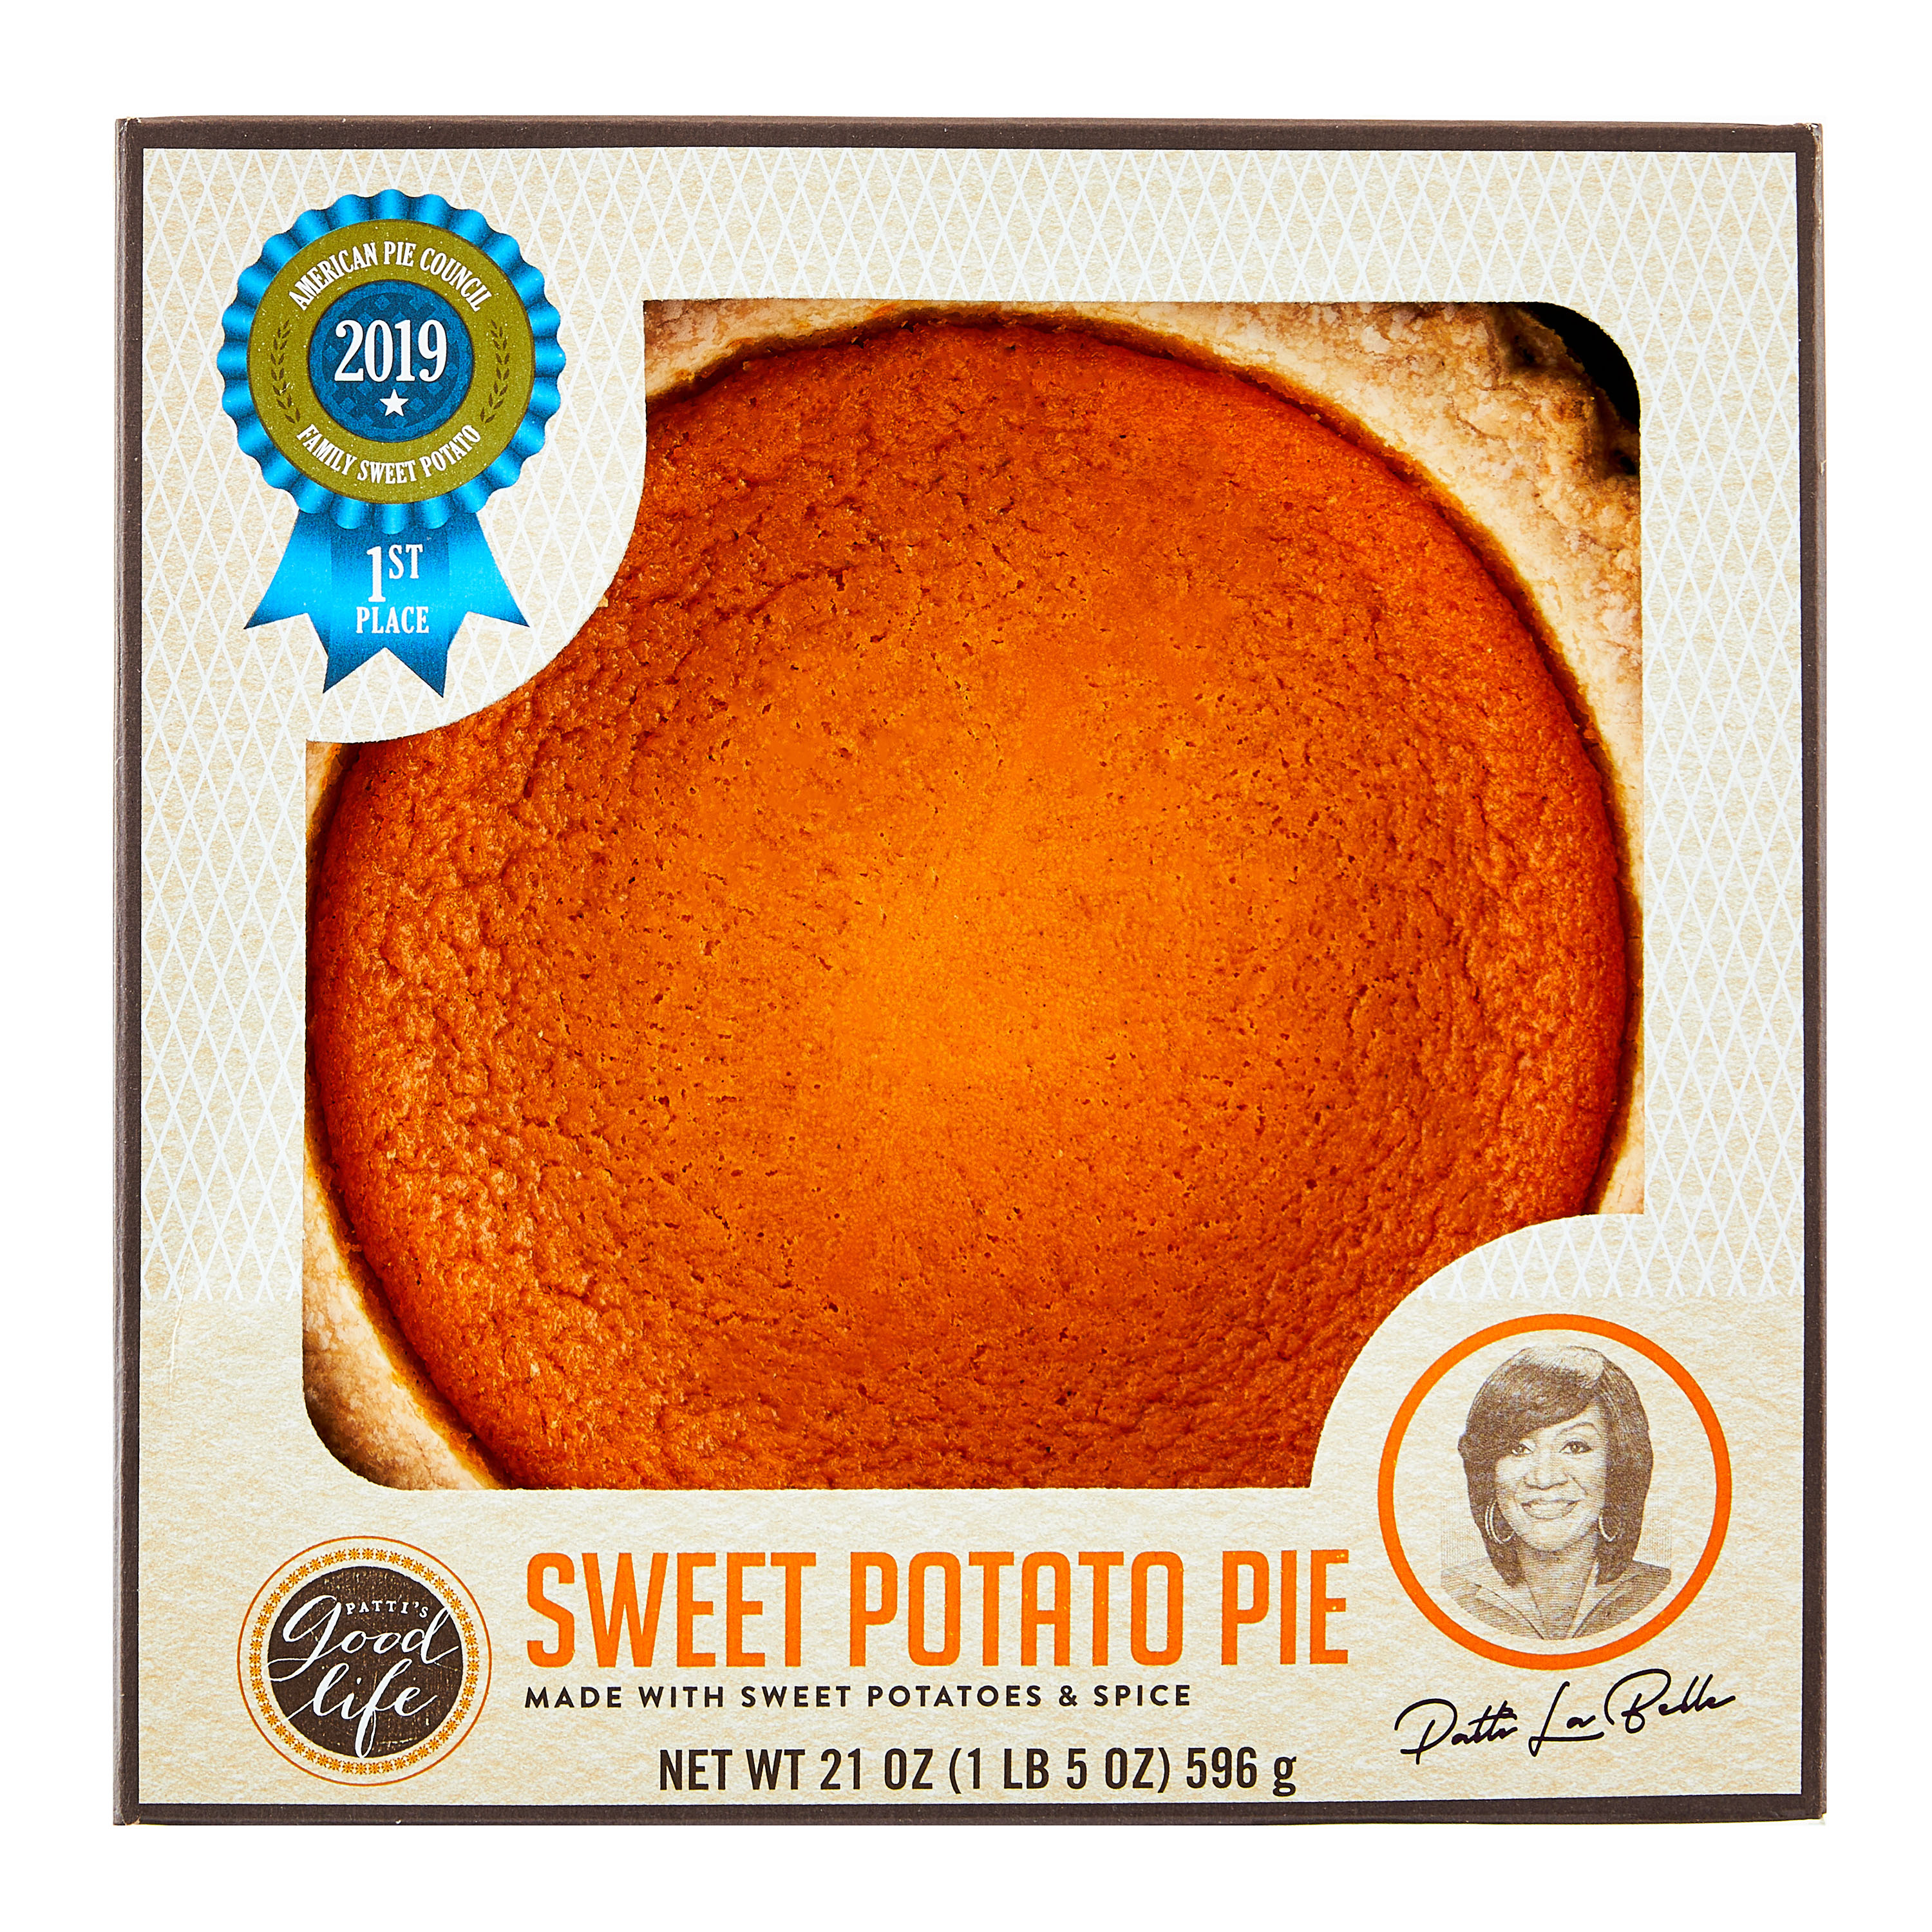 Patti LaBelle 8 inch Sweet Potato Pie, 1 Count, 21 oz - image 1 of 7